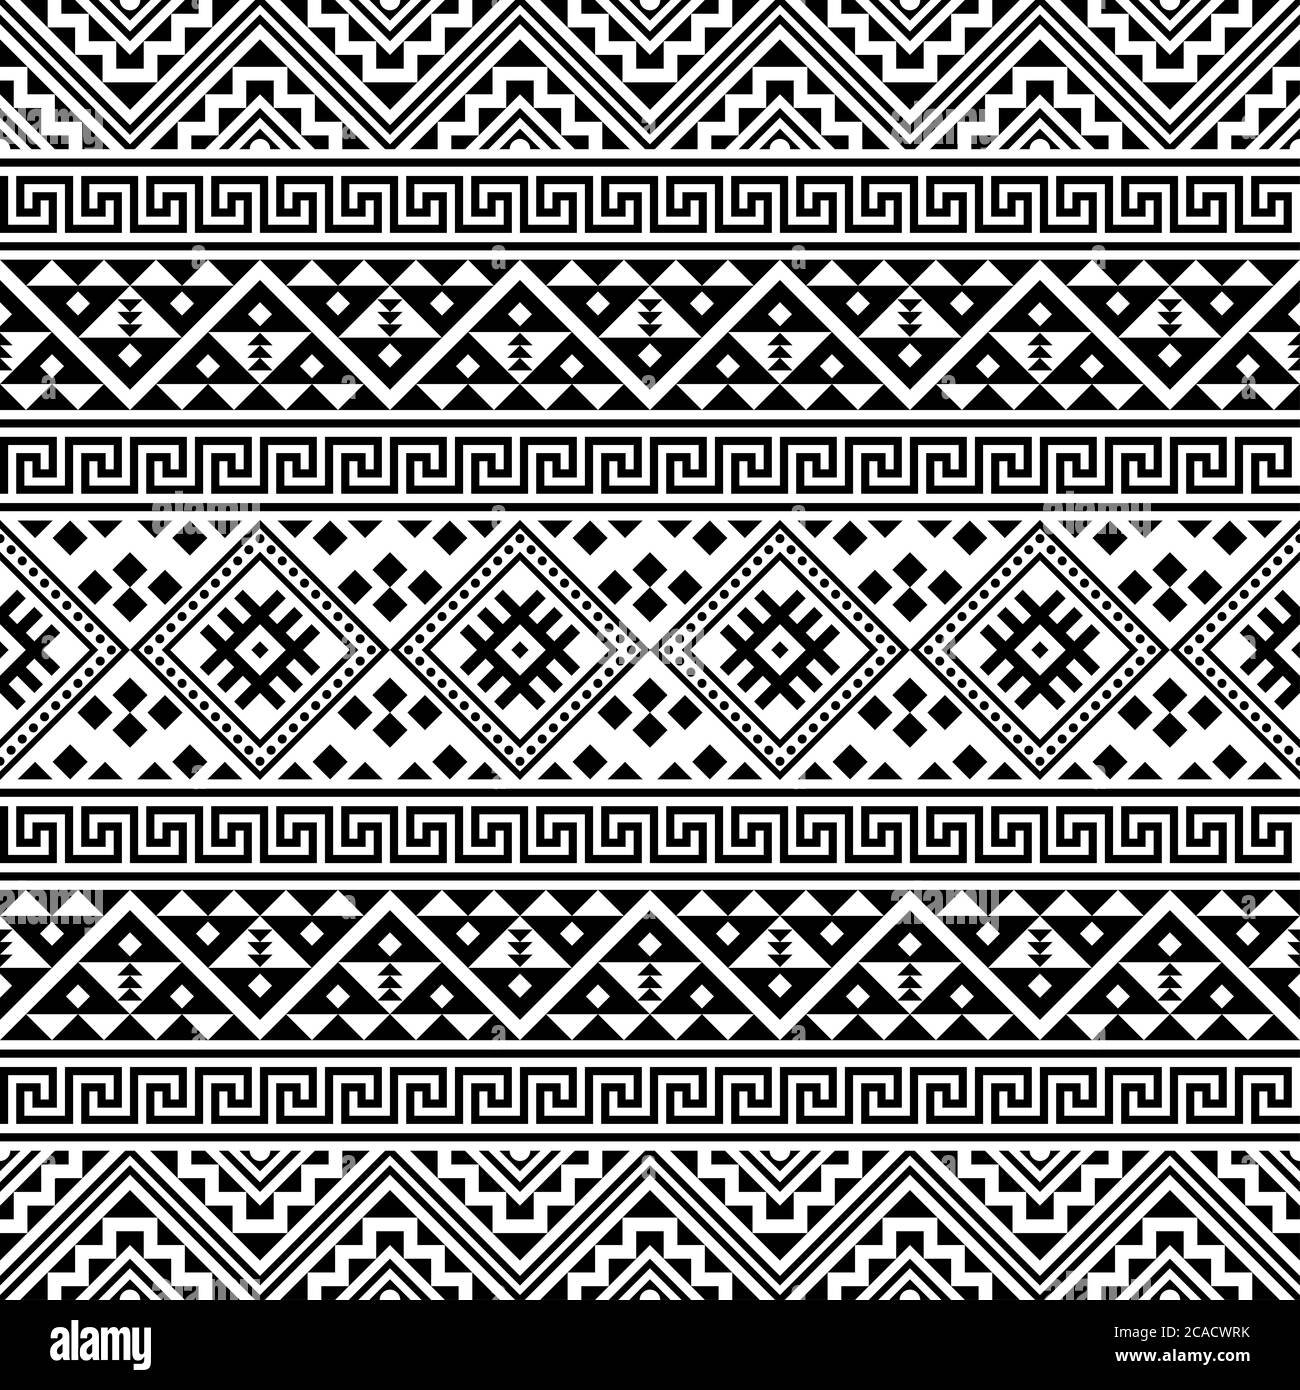 Aztec Design Black And White Wallpaper